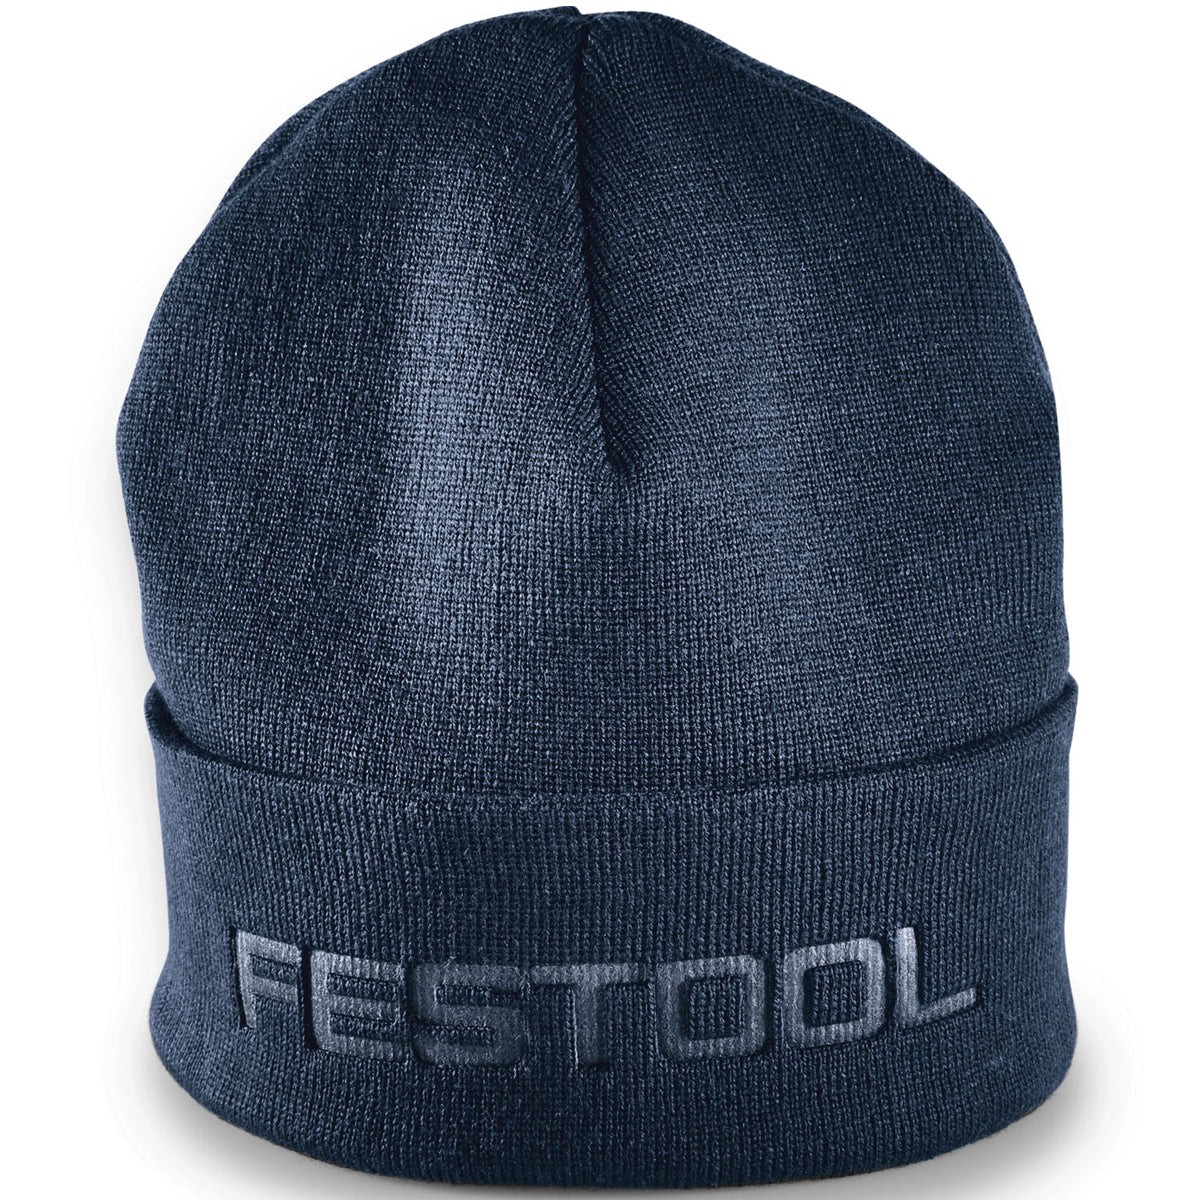 Festool Dark Blue Embroidered Knitted Hat - 202308